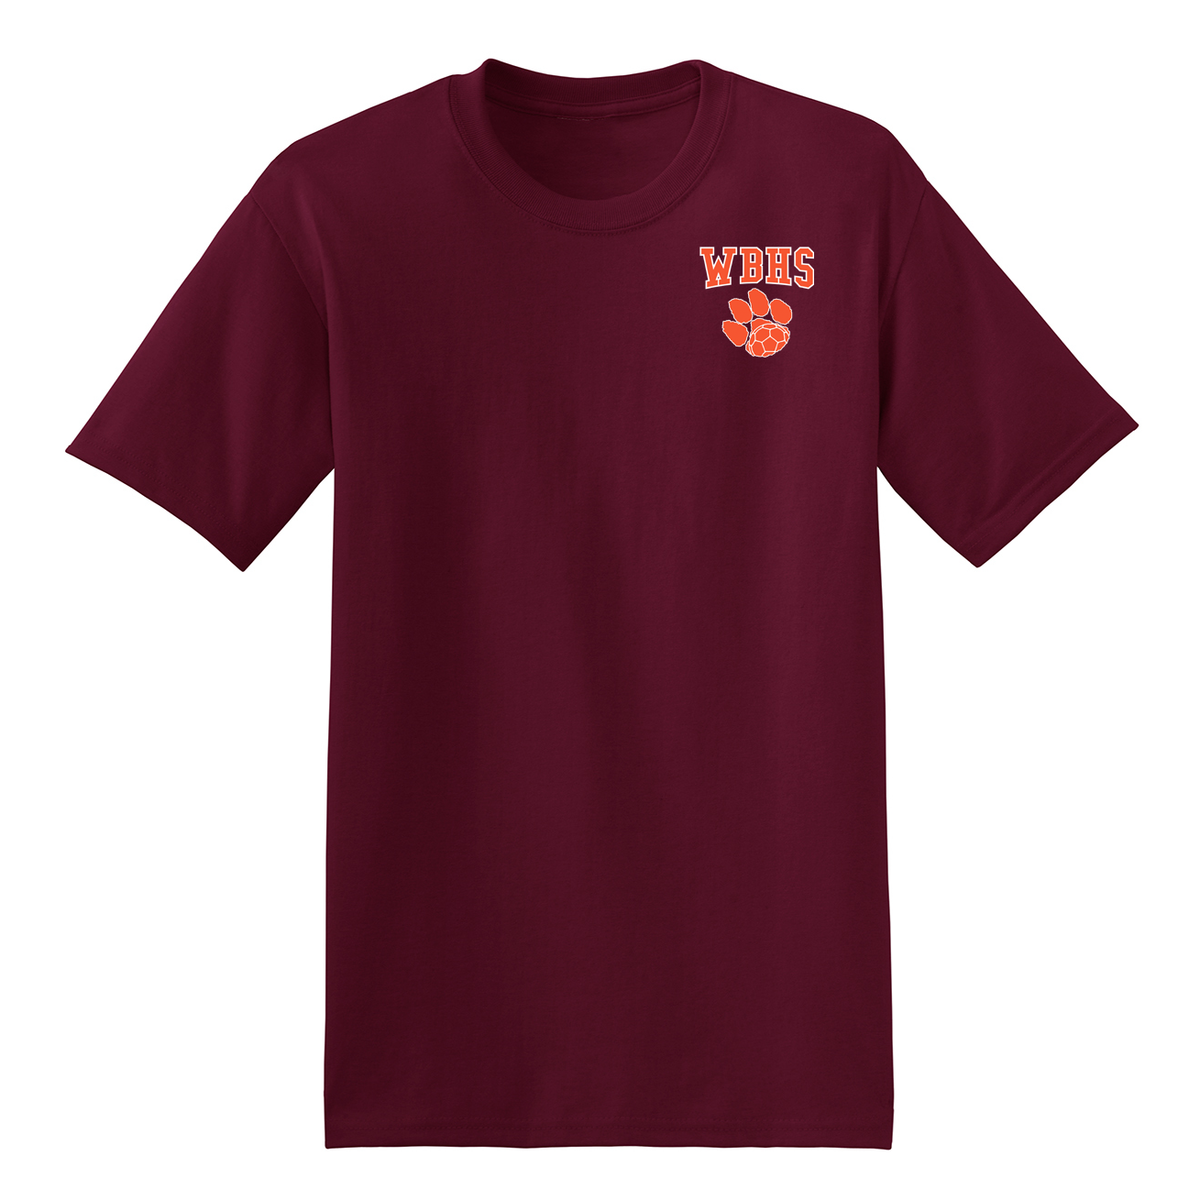 WBHS Boys Soccer T-Shirt